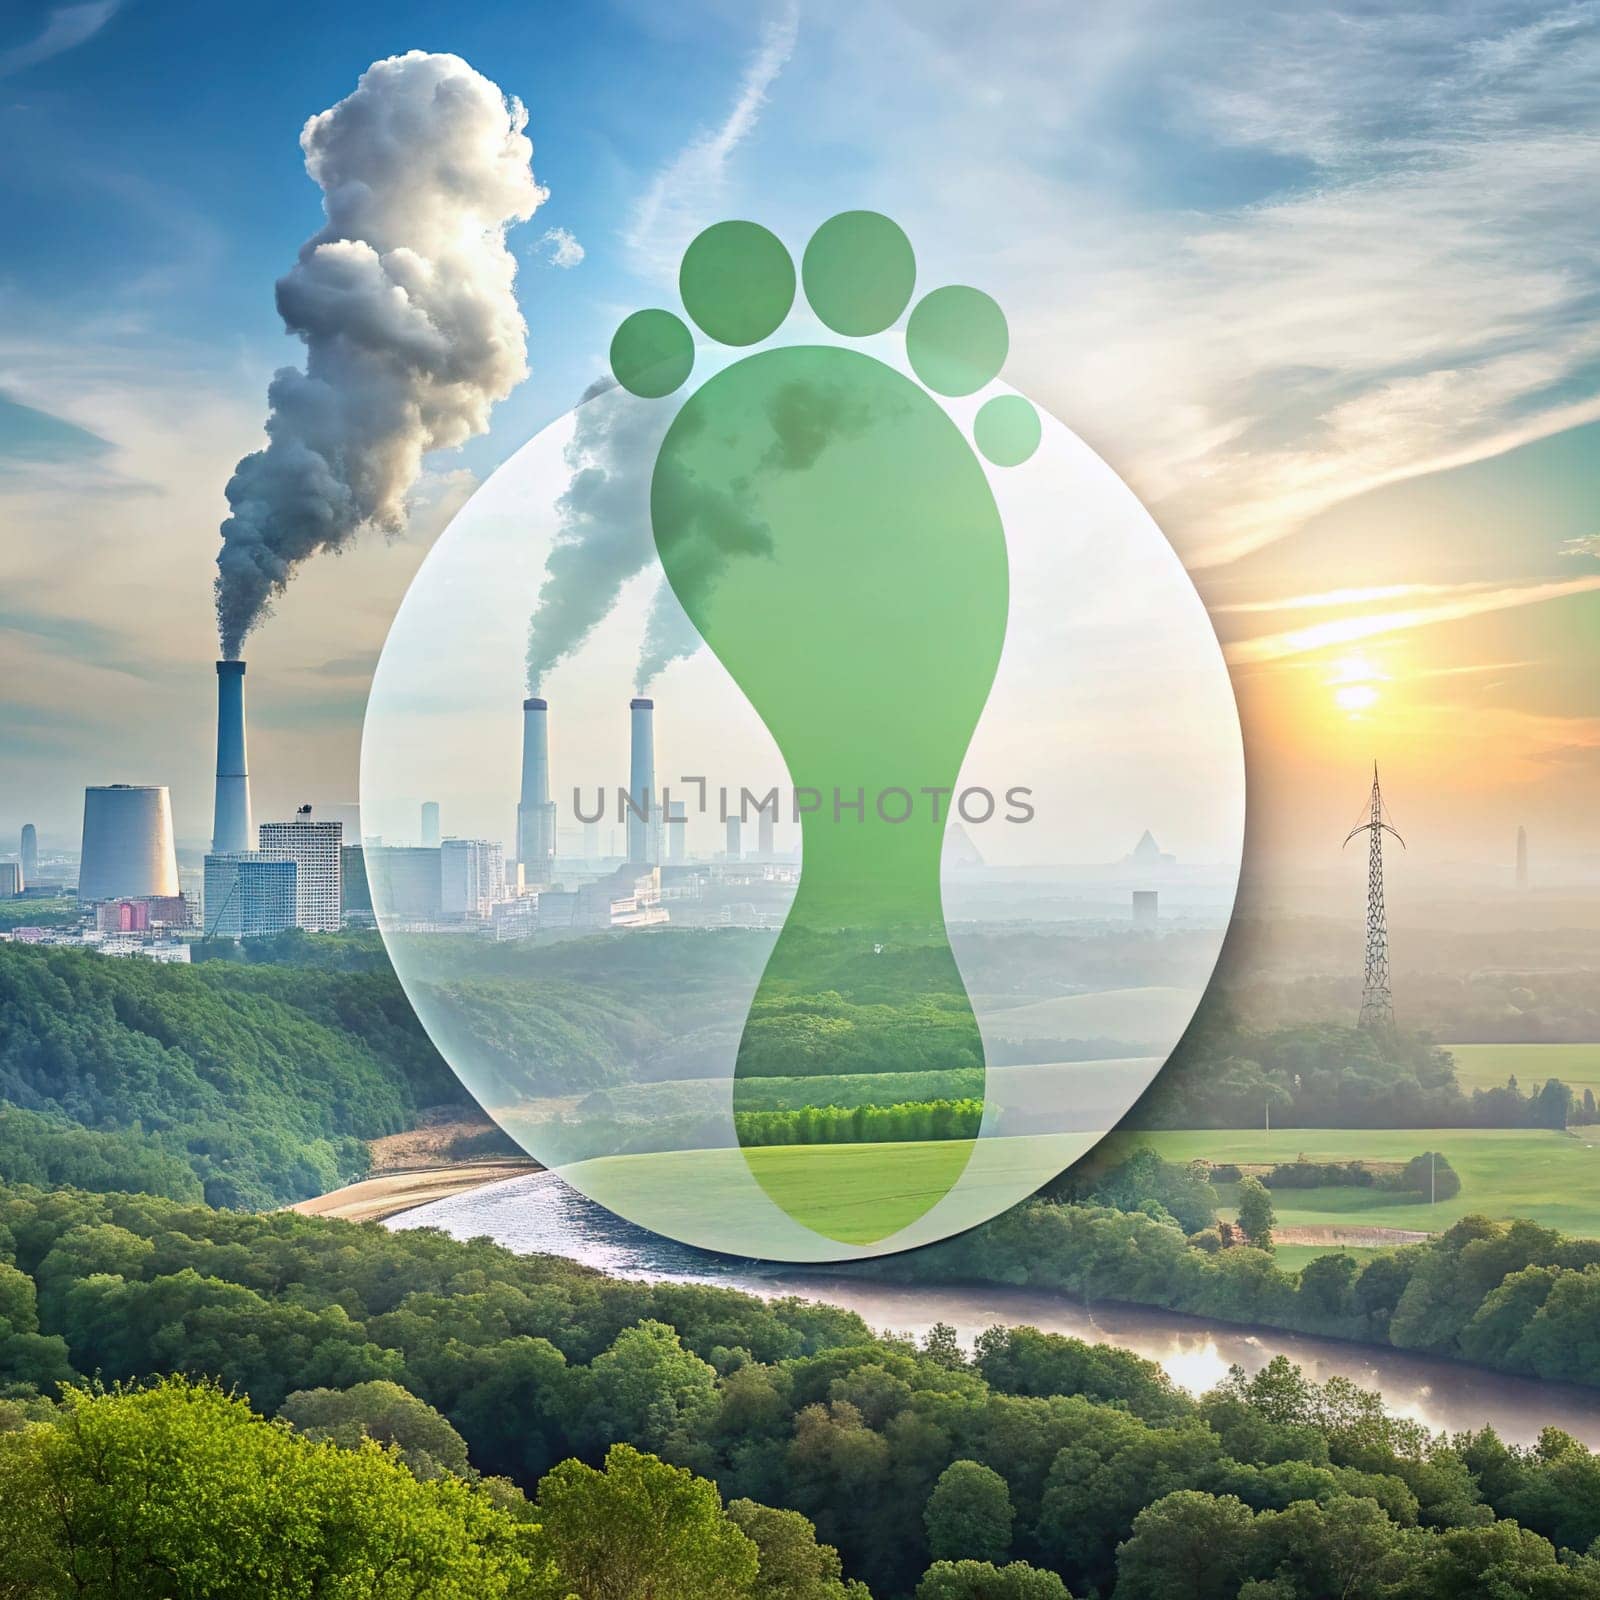 Carbon footprint that endangers natural life by yilmazsavaskandag